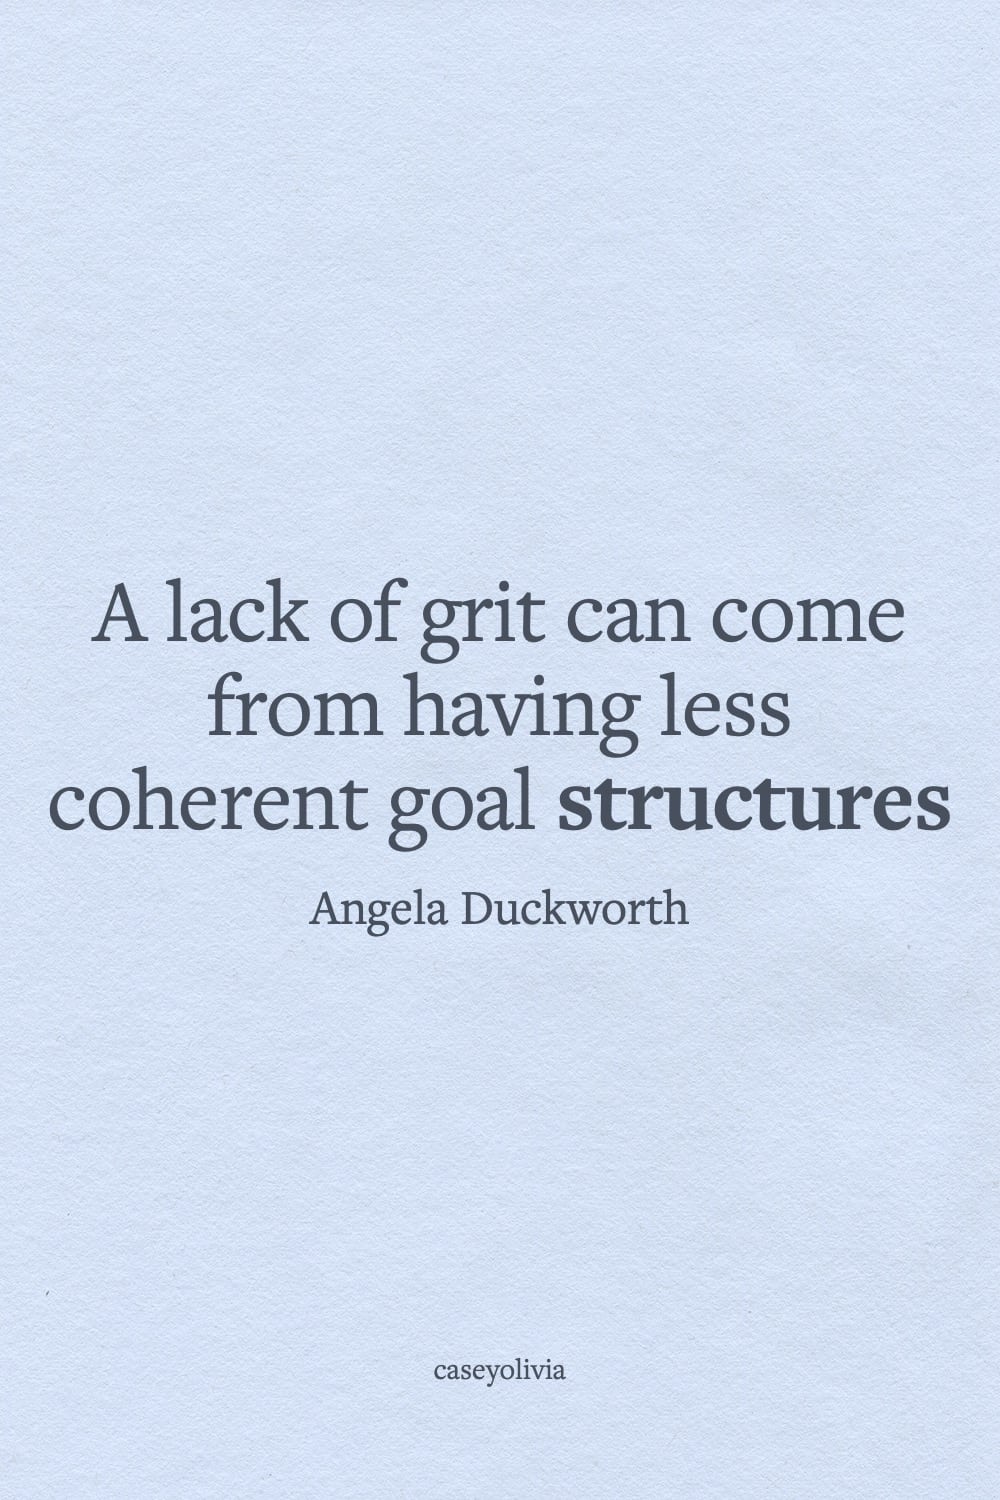 angela duckworth lack of grit quote